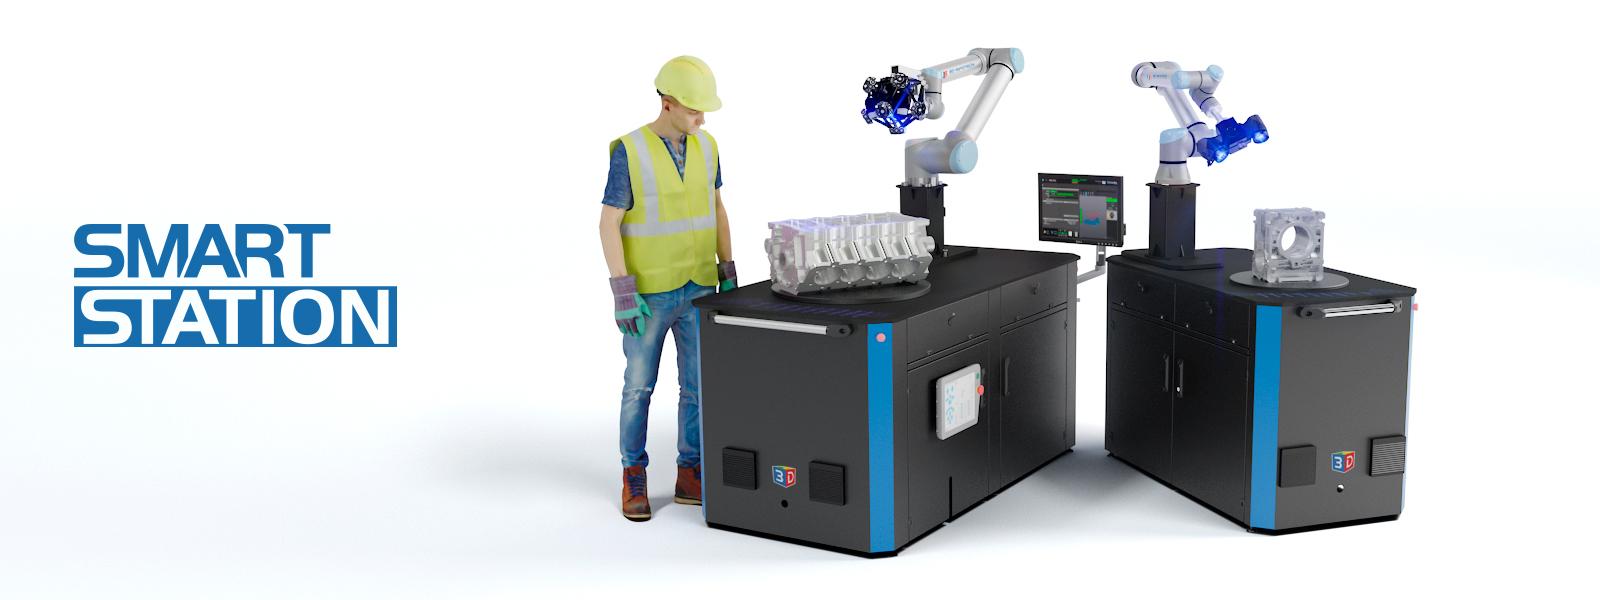 Robotic Inspection with UMA Smart Station